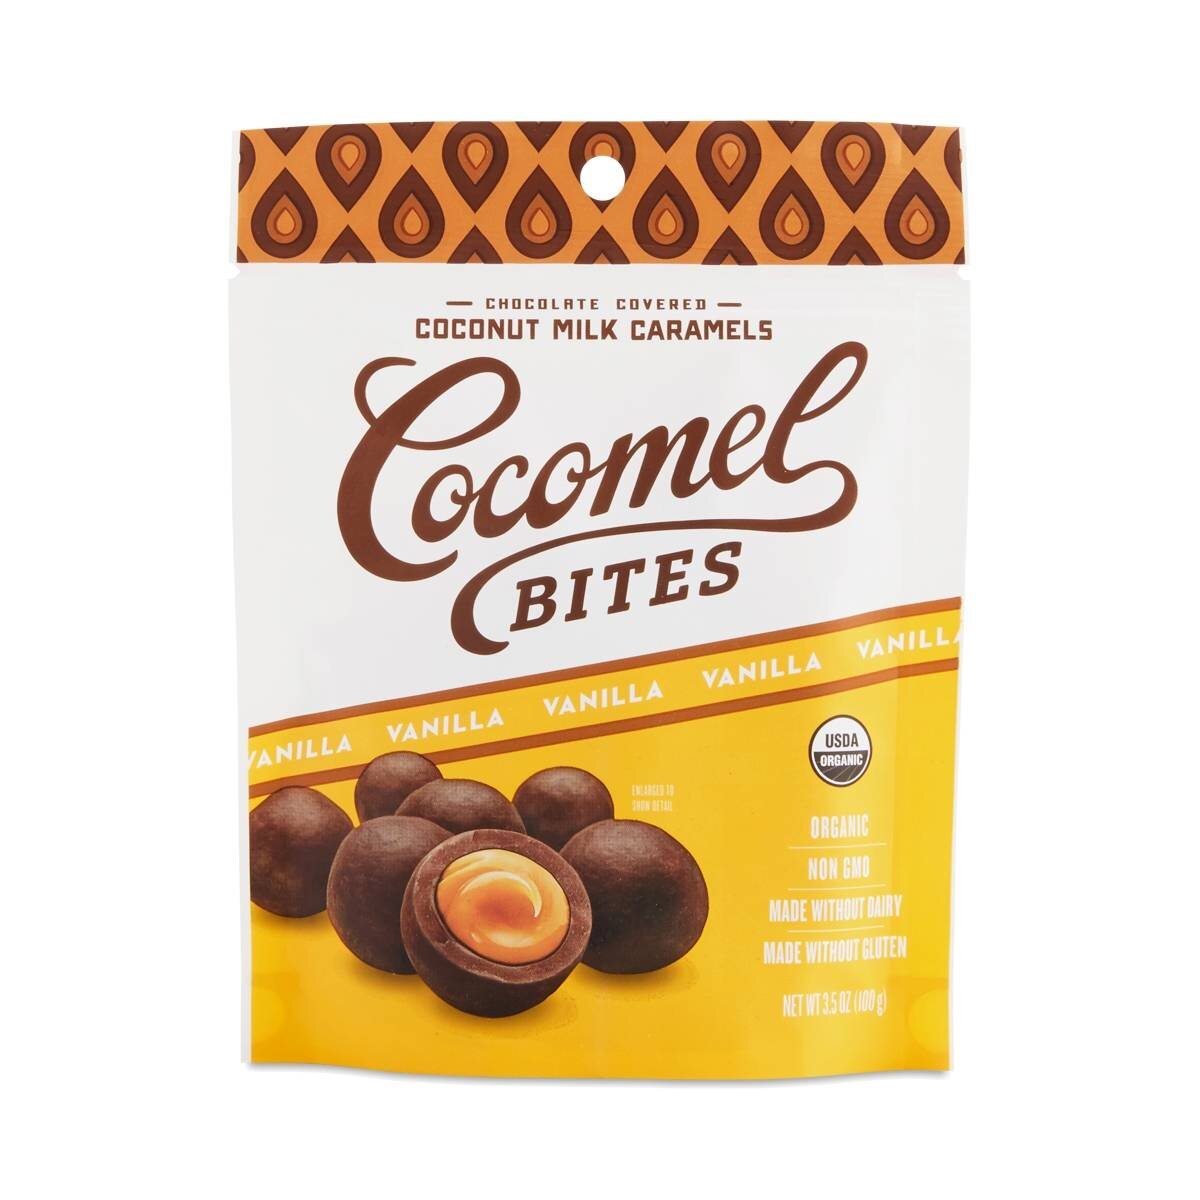 Cocomel Bites - Vanilla